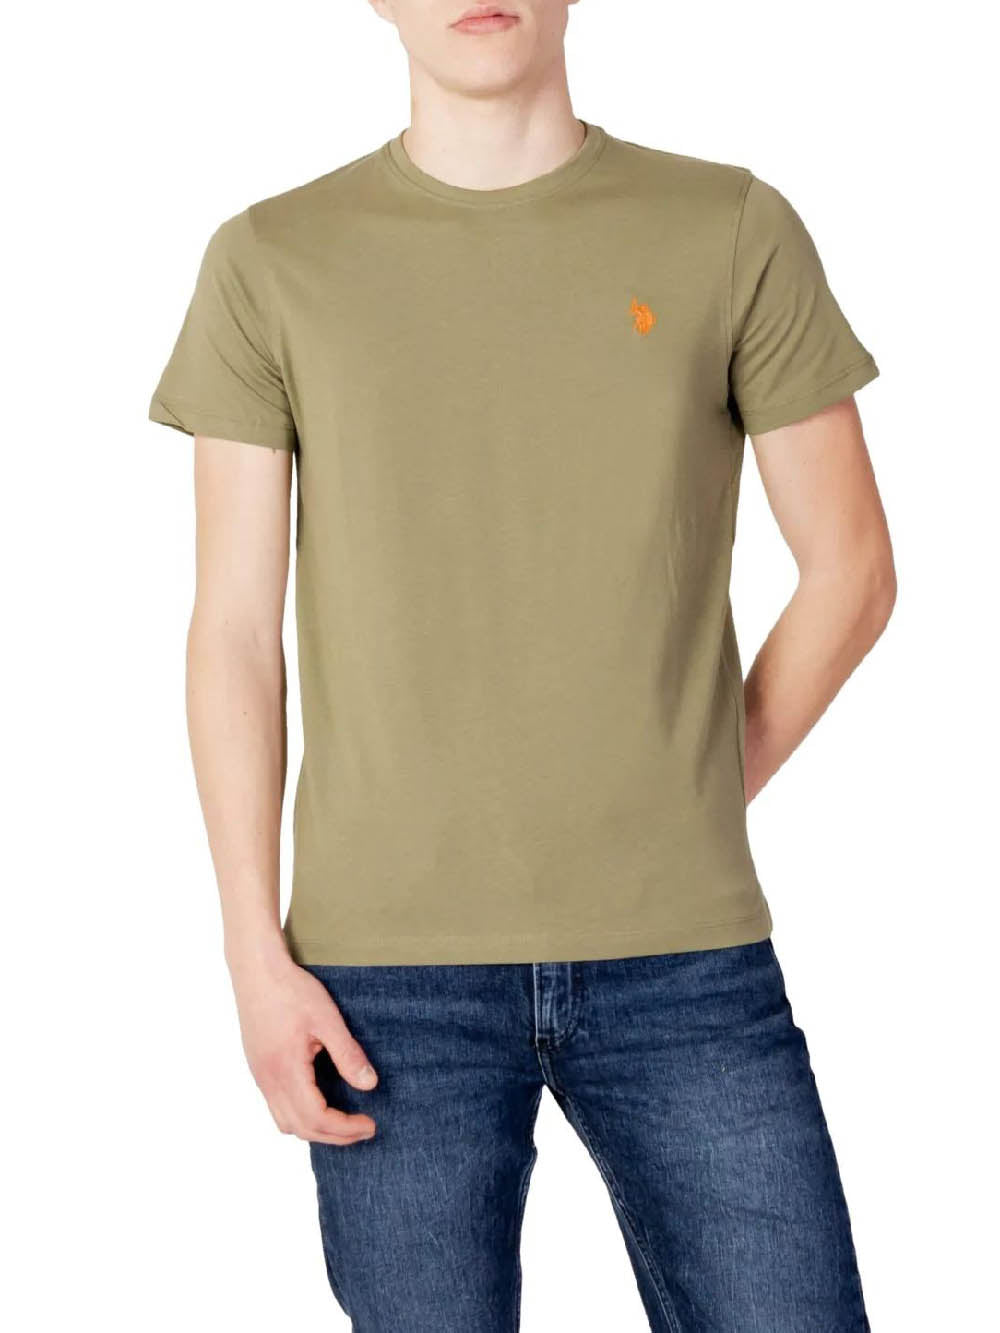 U.S. POLO ASSN. T-shirt Uomo Verde militare